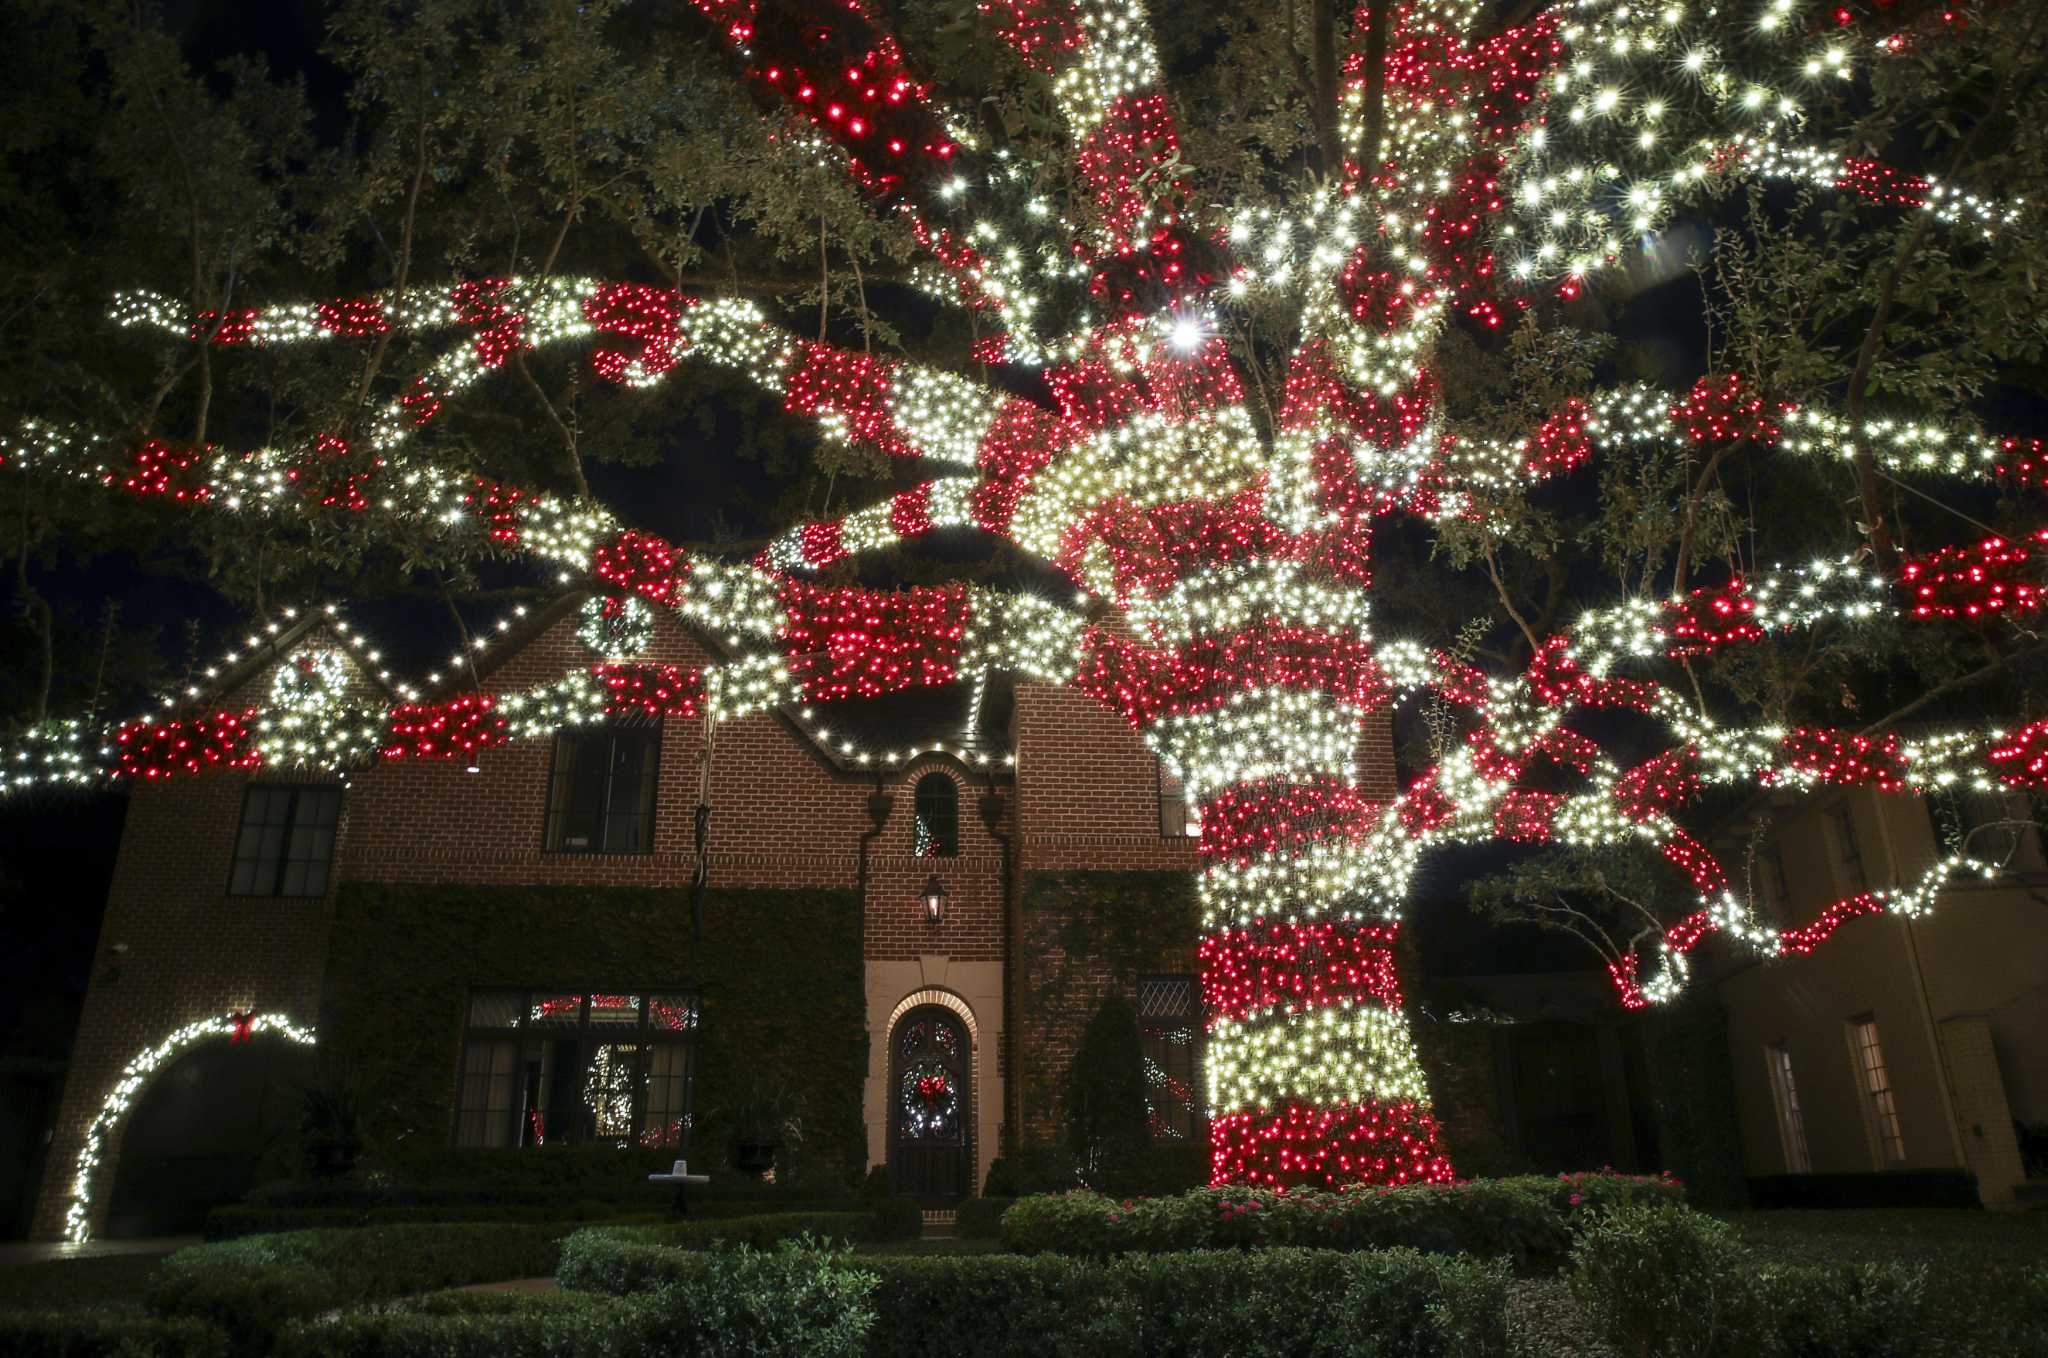 Best Houston neighborhoods for Christmas lights, according to readers